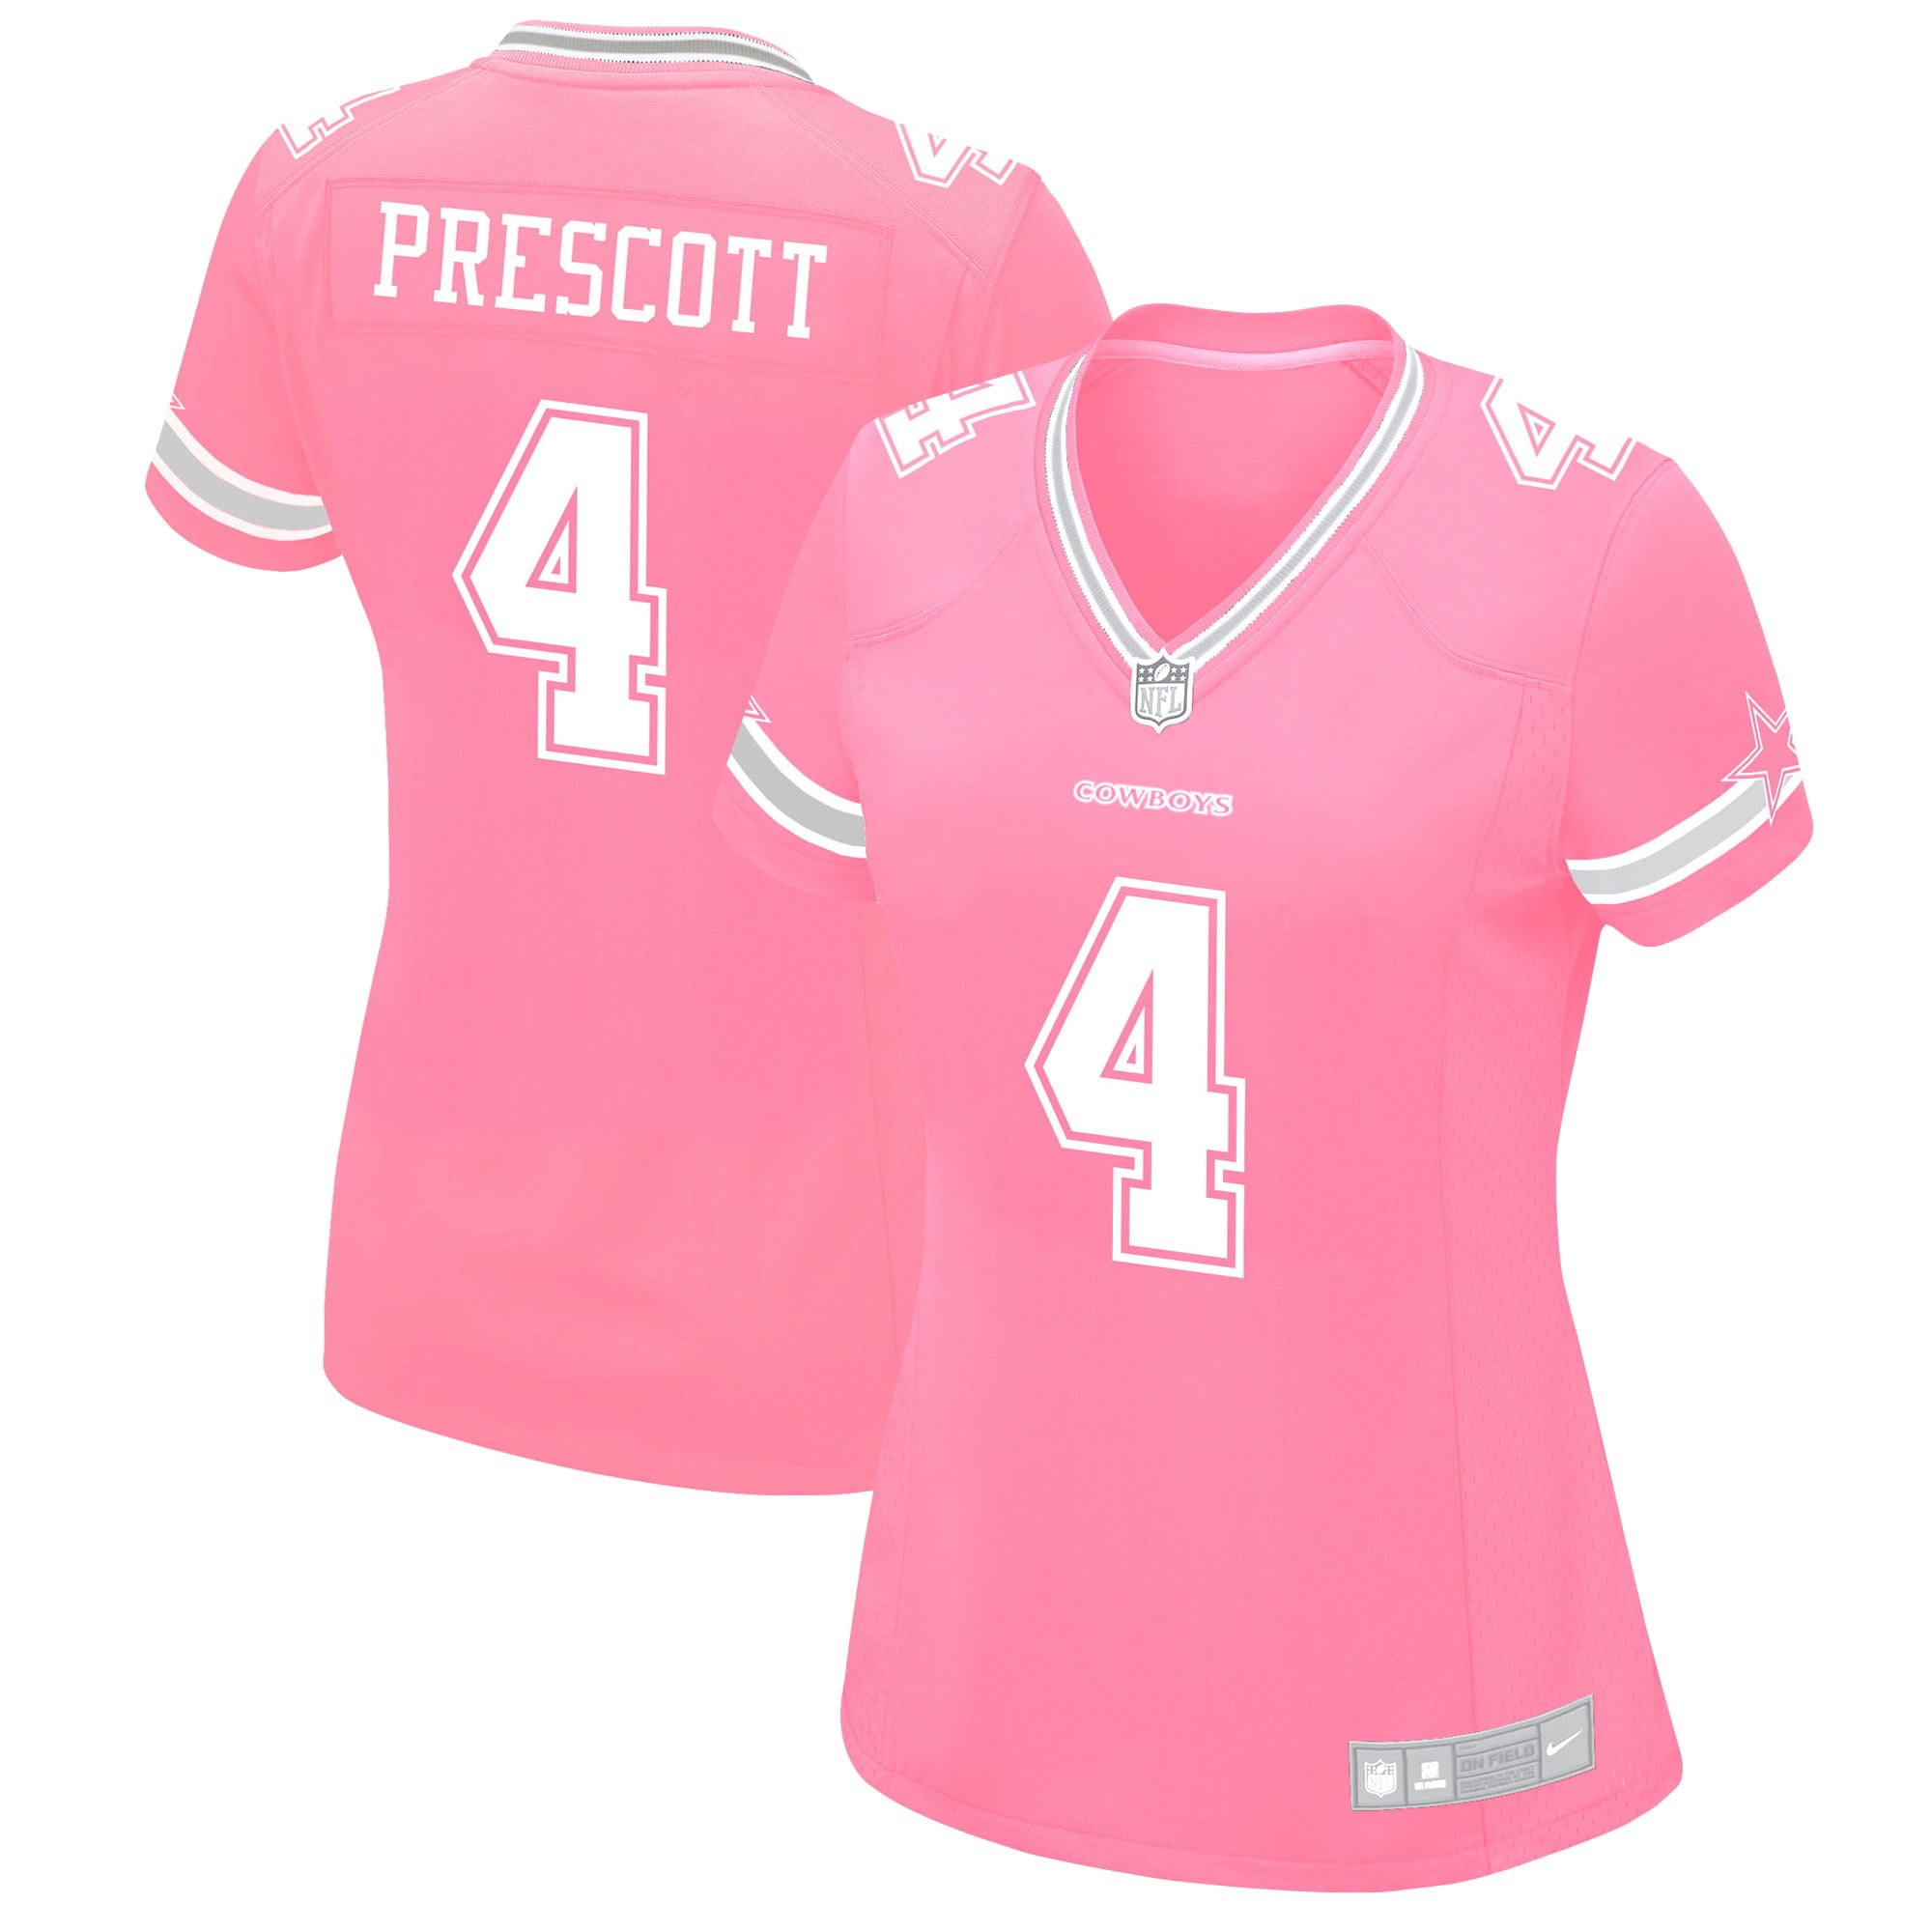 dak prescott women's jersey